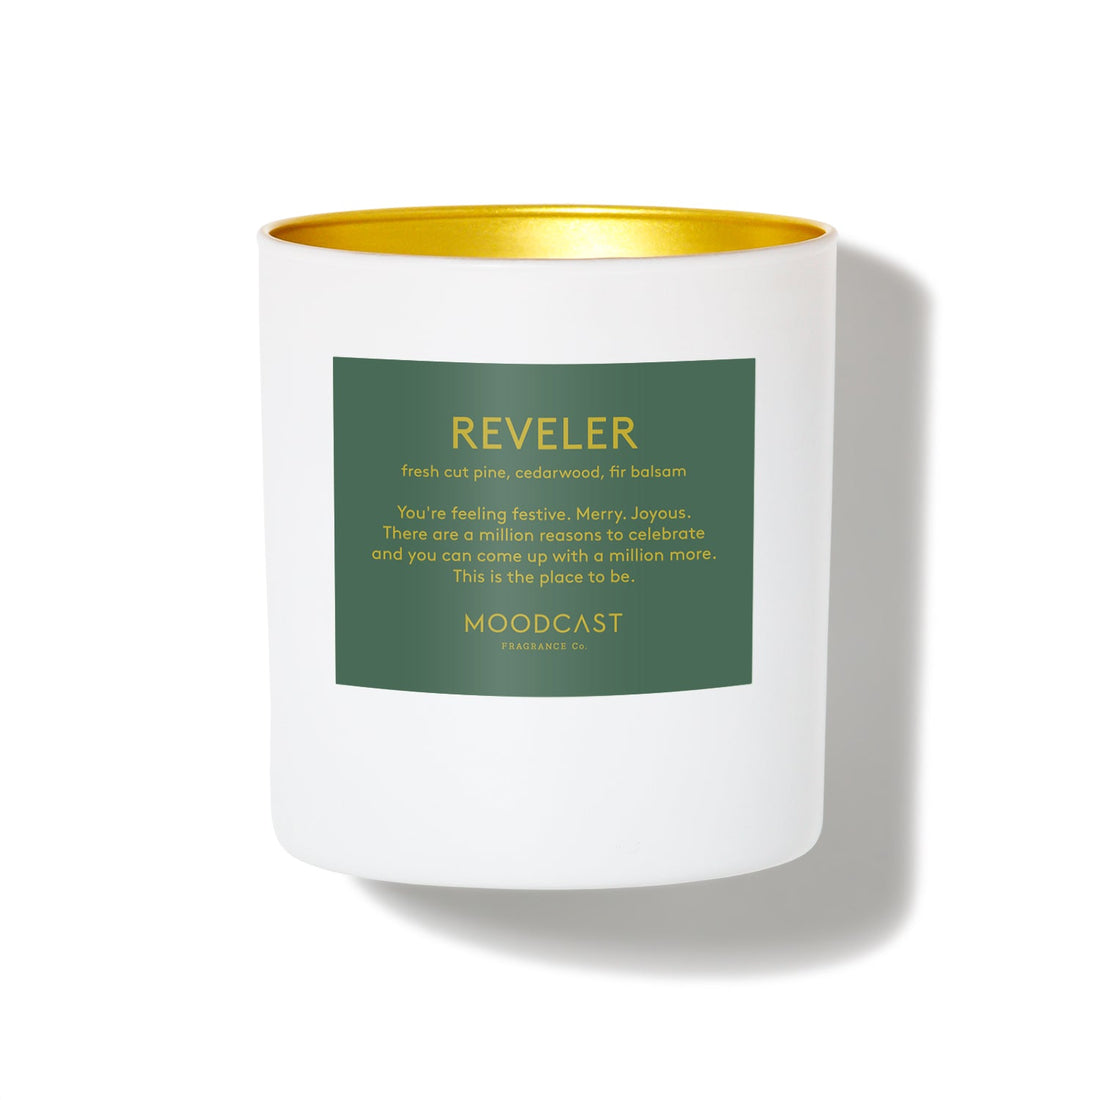 Reveler - Persona Collection (White & Gold) - 8oz/227g Coconut Wax Blend Glass Jar Candle - Key Notes: Fresh Cut Pine, Cedarwood, Fir Balsam